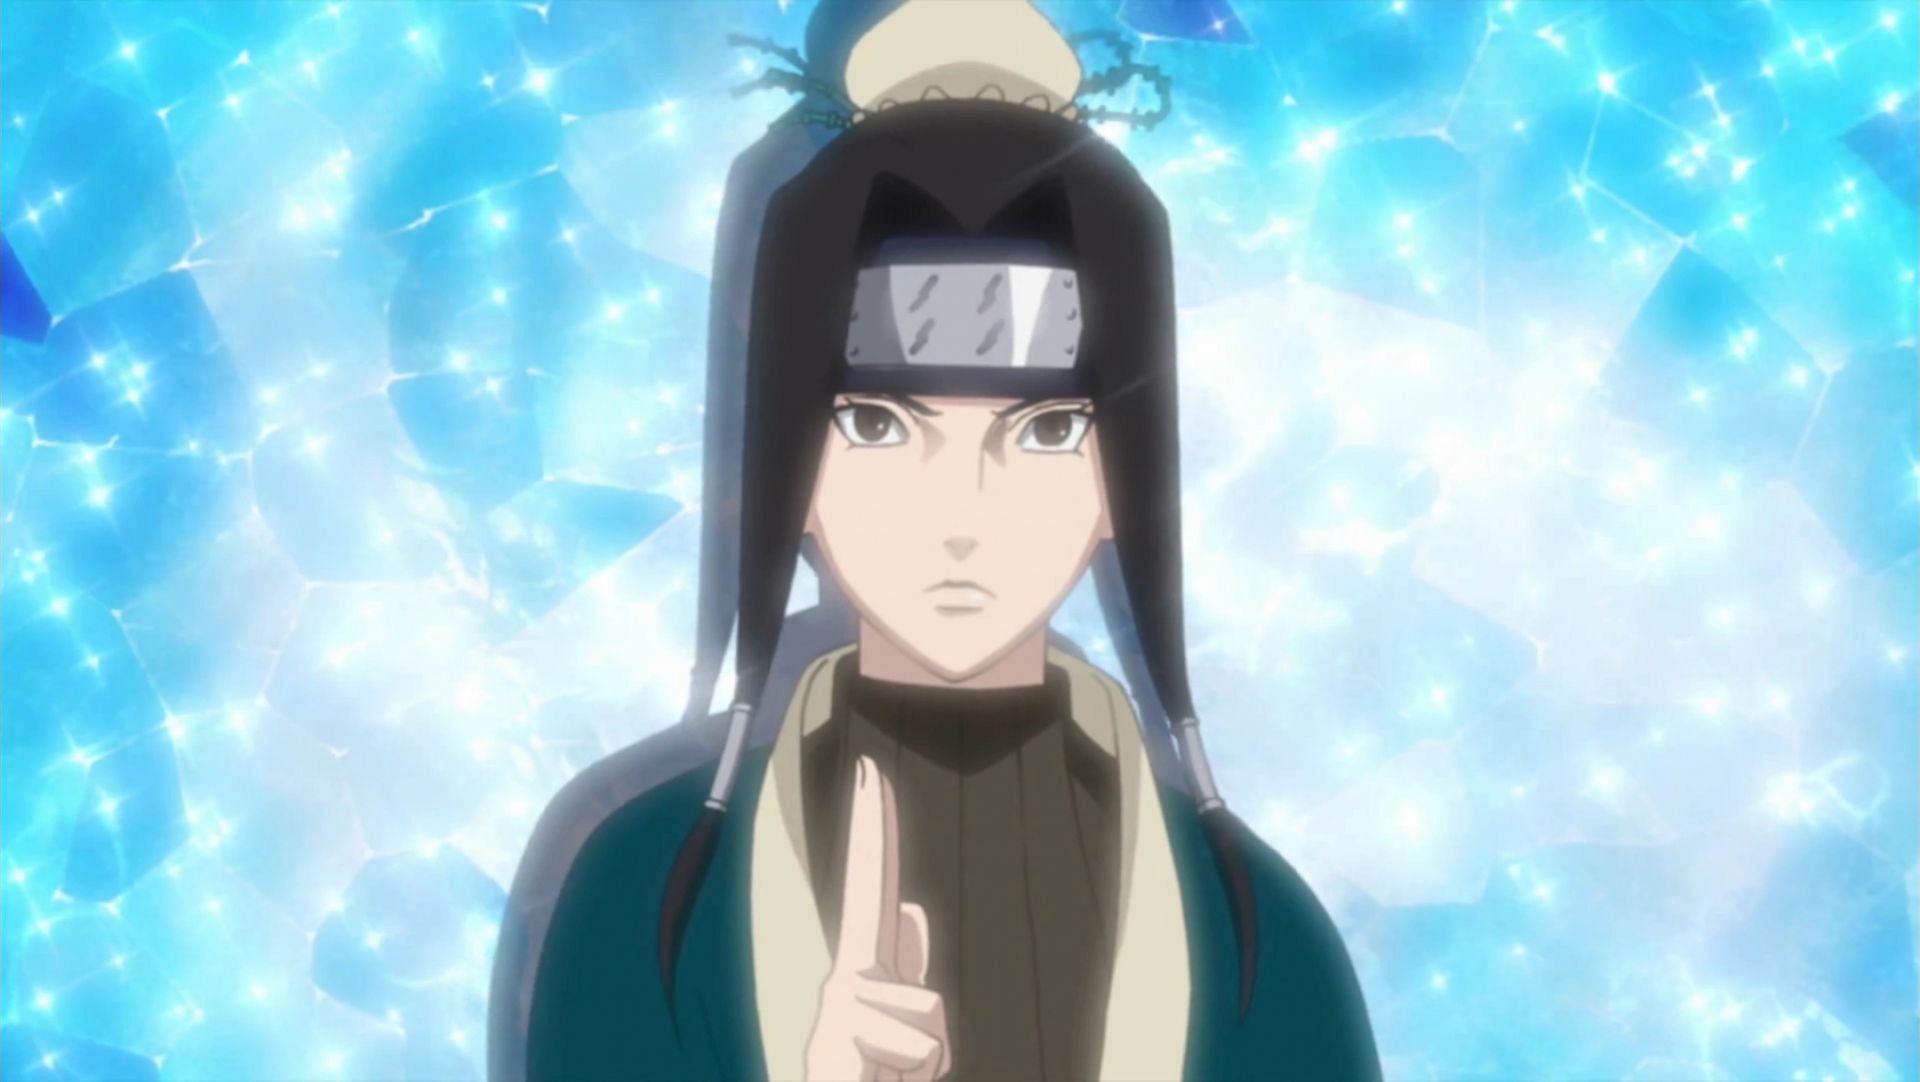 Haku as seen in the anime Naruto (Image via Studio Pierrot)